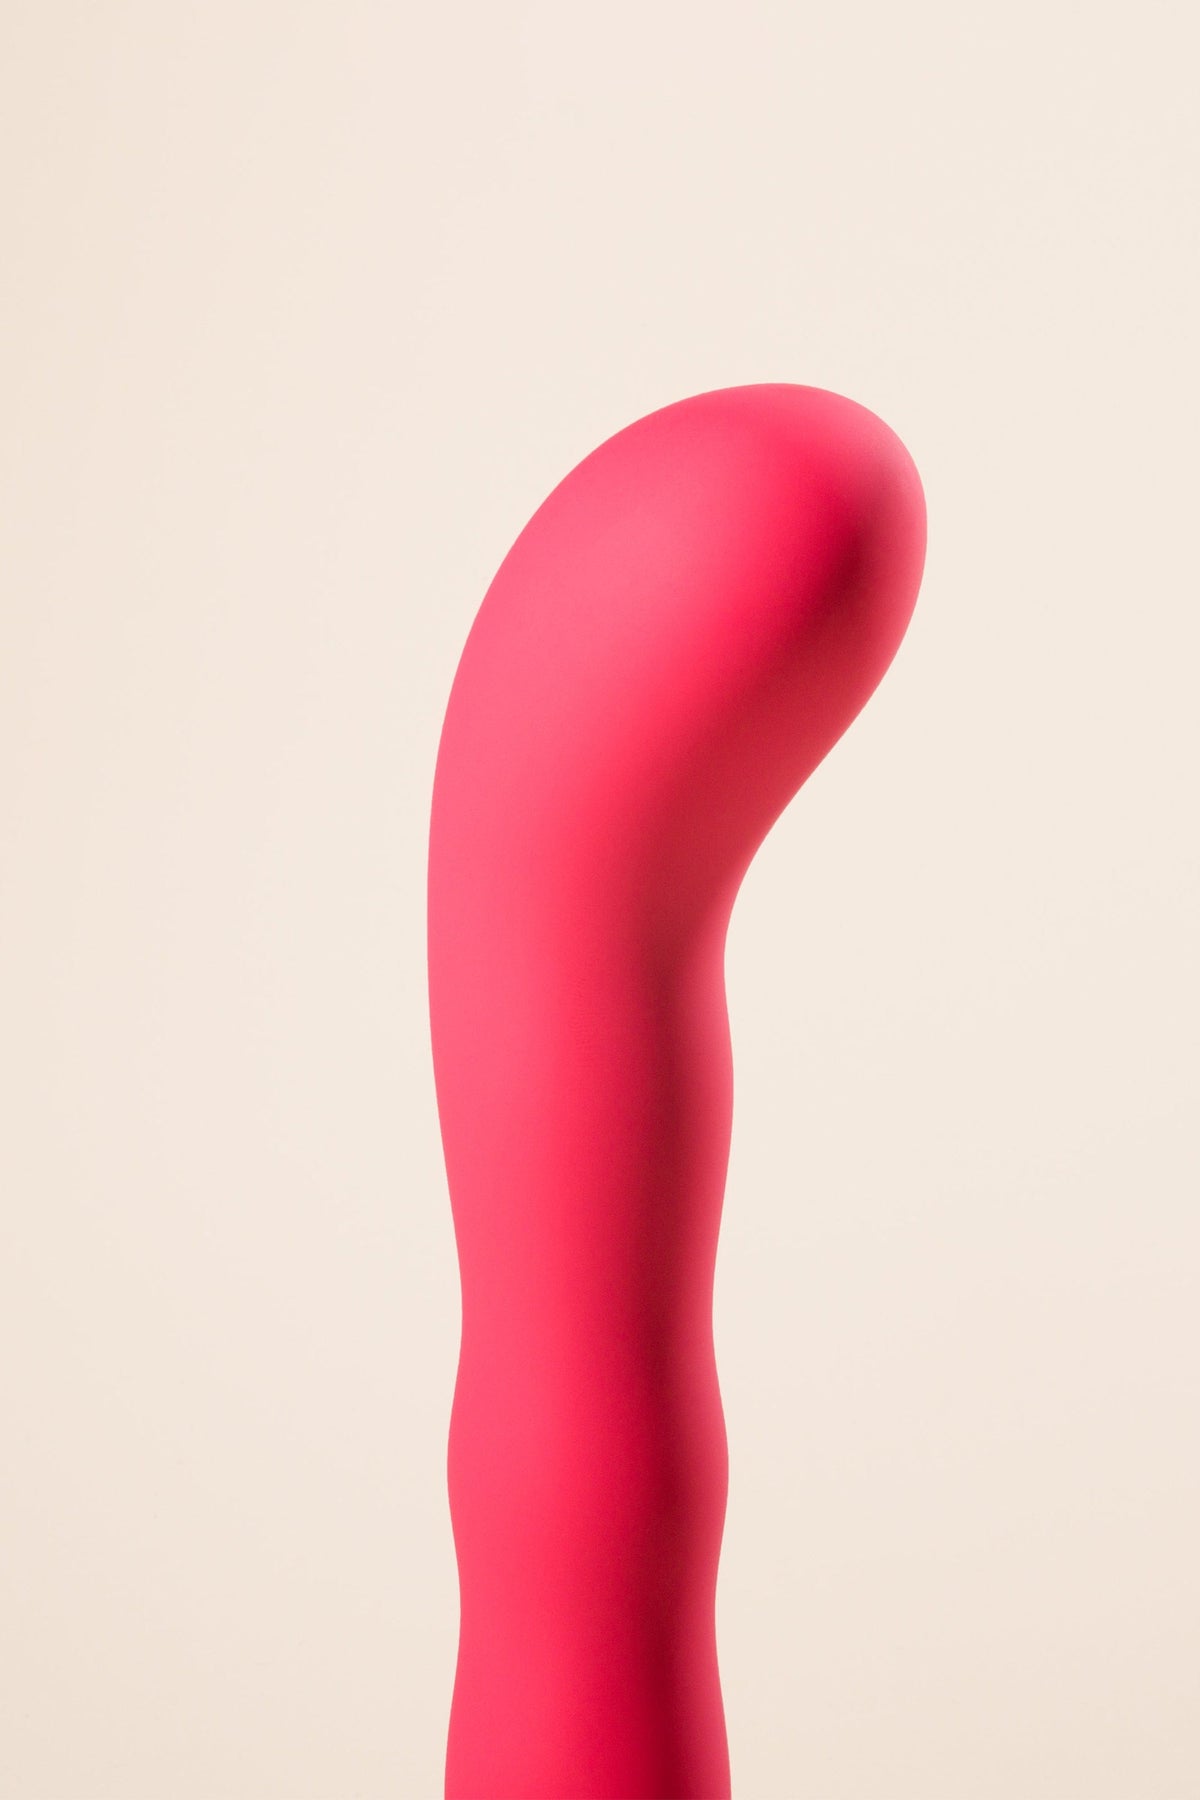 The Romantic Sensuous Vaginal Vibrator